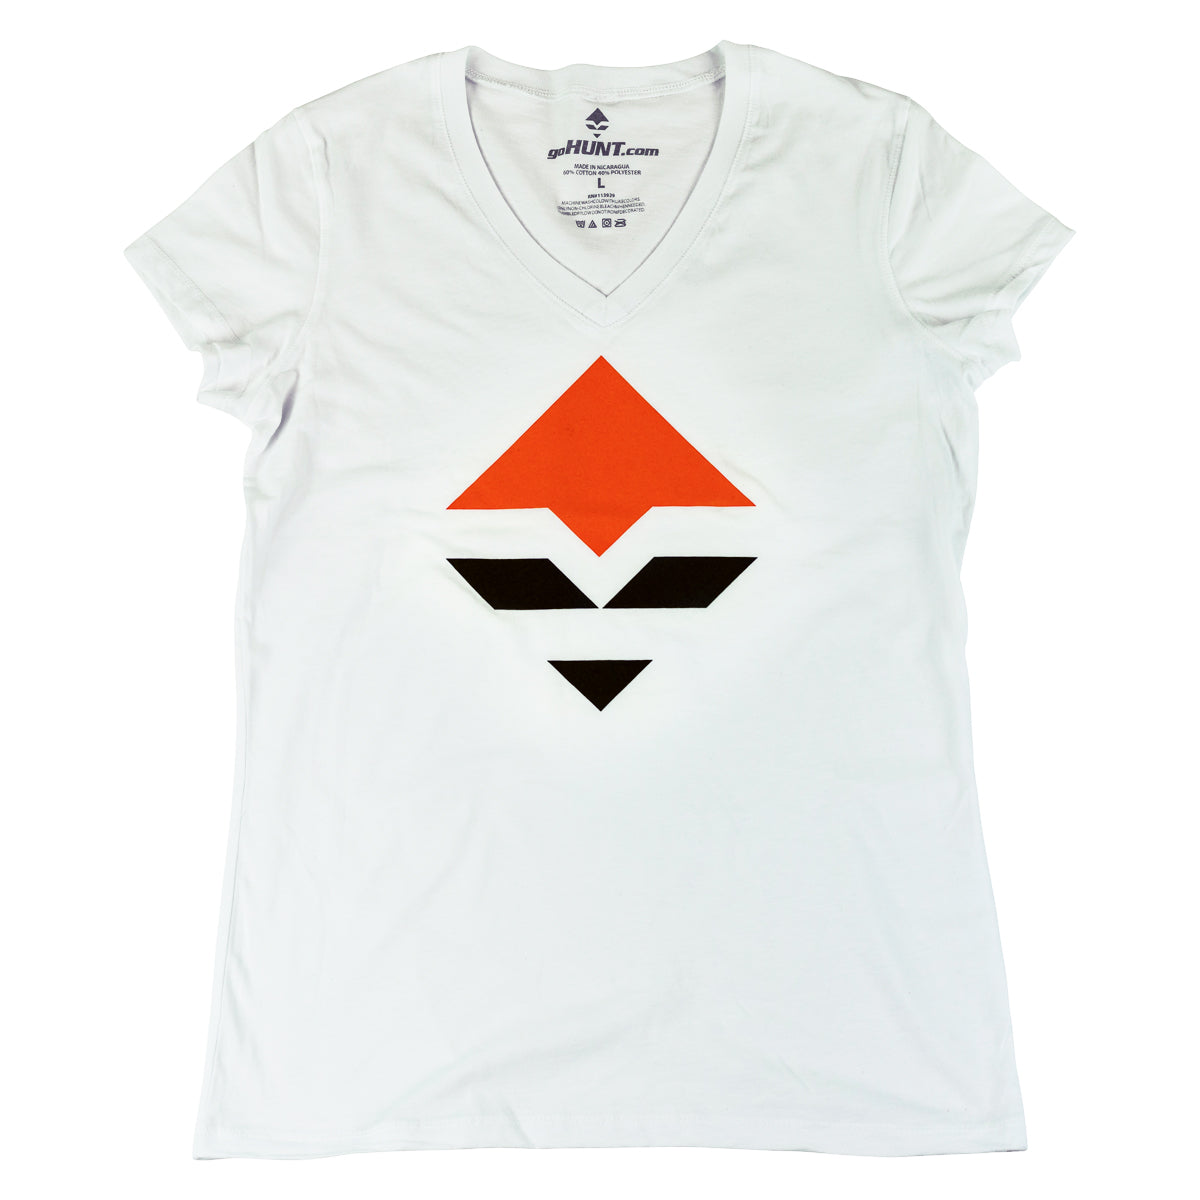 goHUNT Women's V-Neck T-Shirt by goHUNT | Apparel - goHUNT Shop